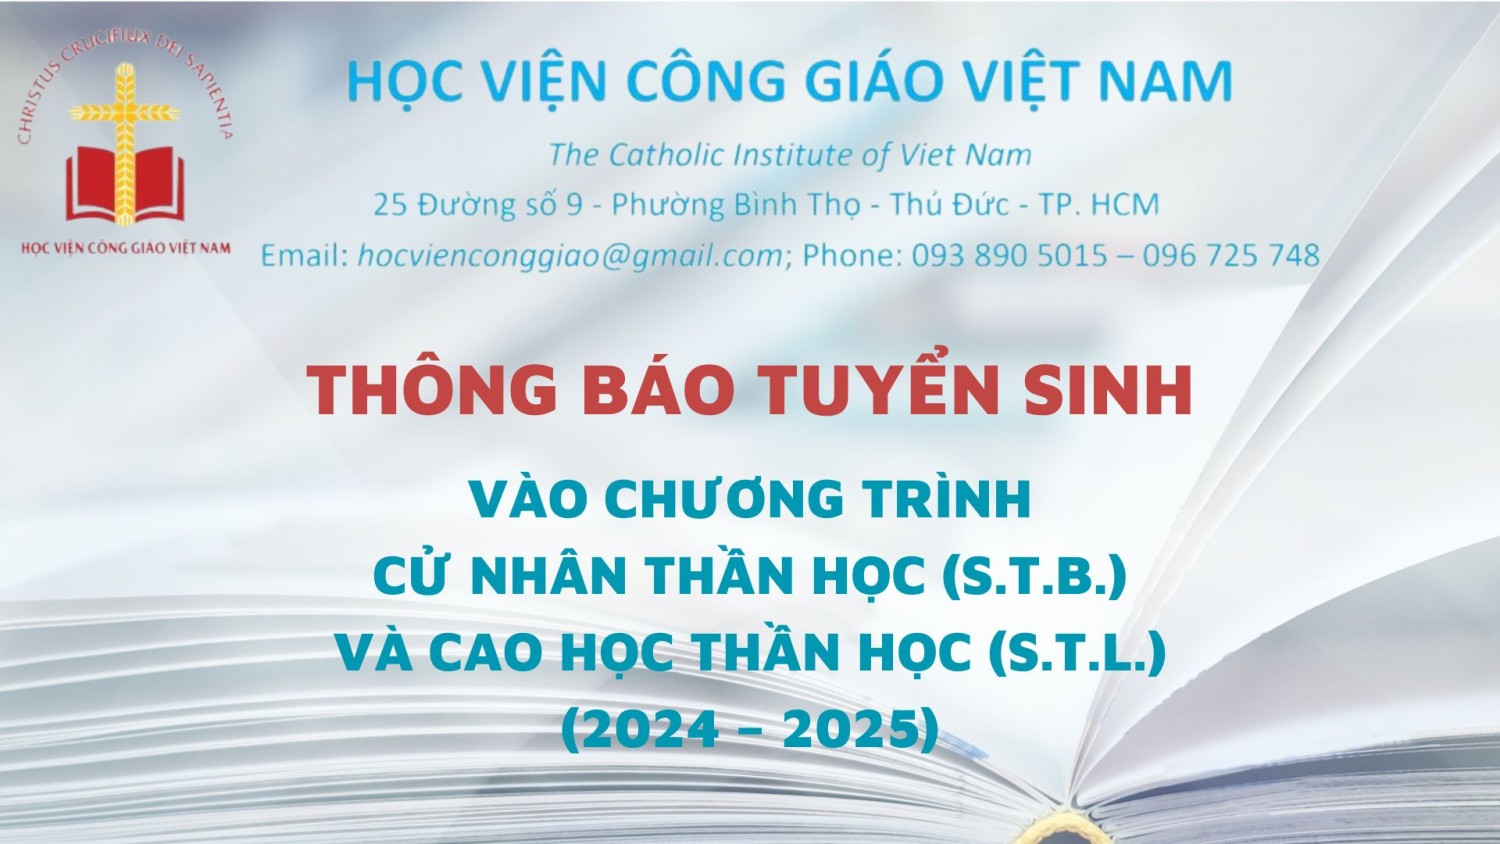 hoc vien cong giao viet nam thong bao tuyen sinh cu nhan va cao hoc than hoc nam 2024 2025